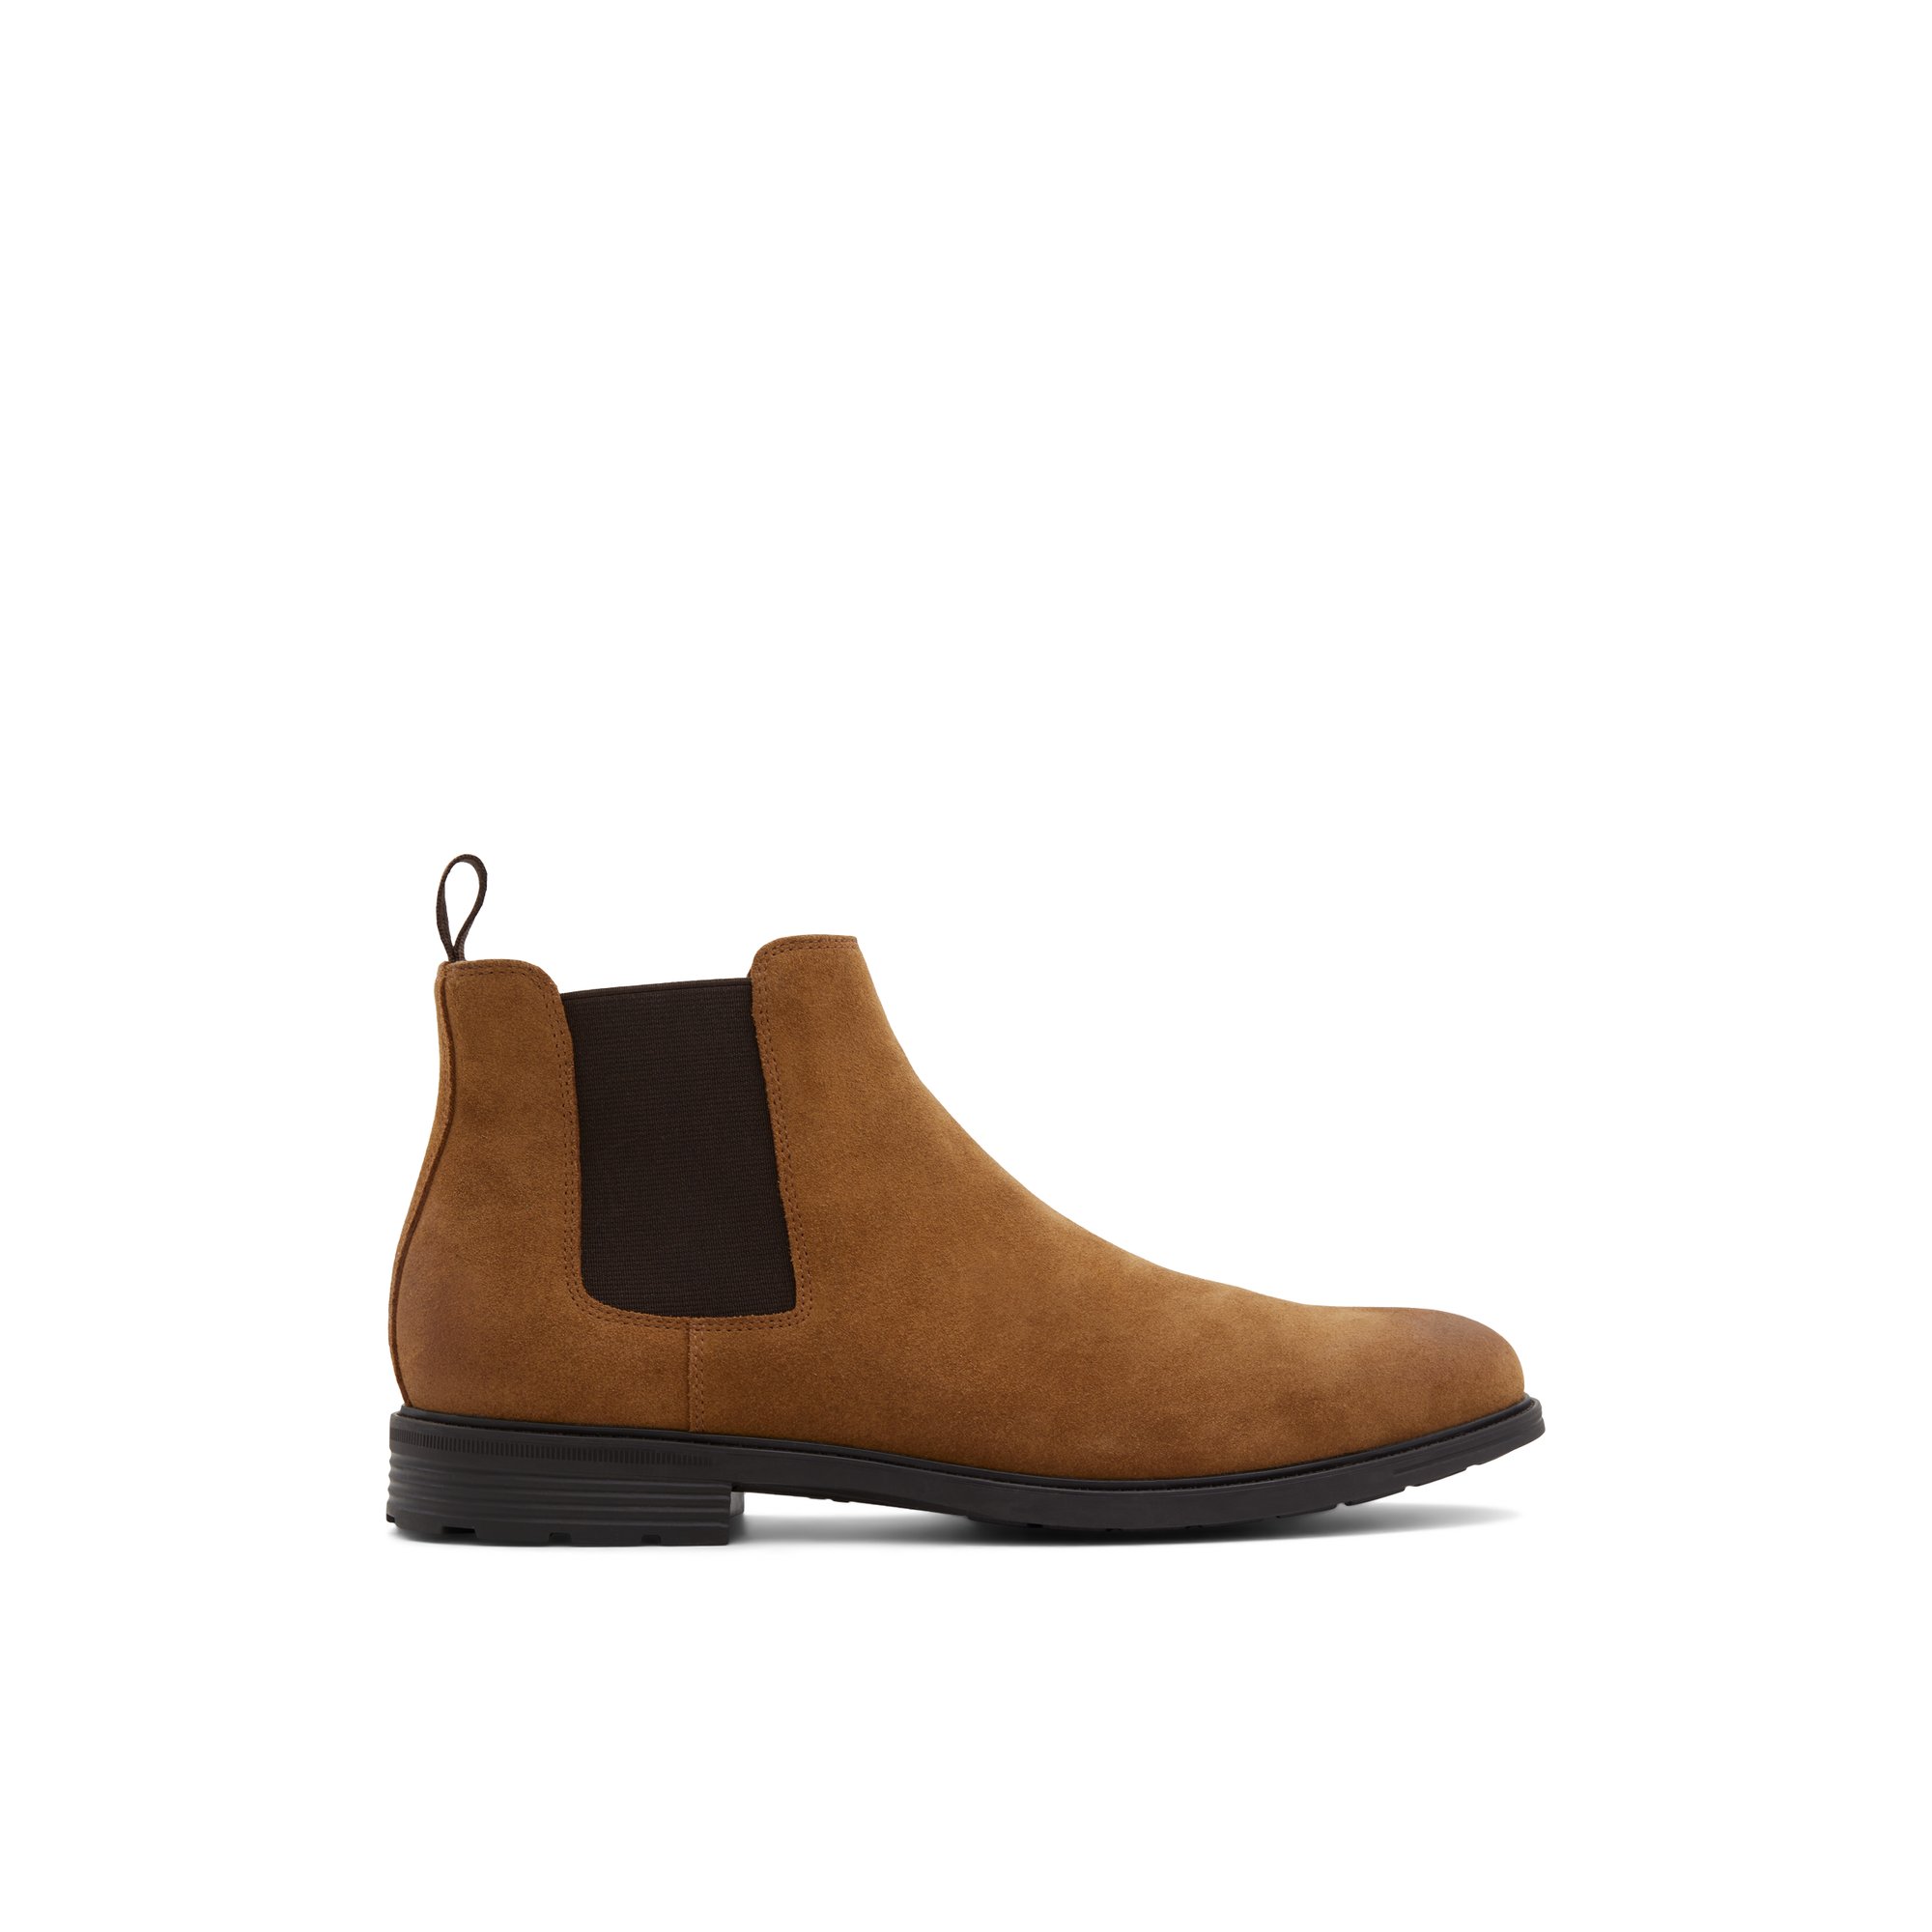 ALDO Lithe - Men's Boots Dress - Brown